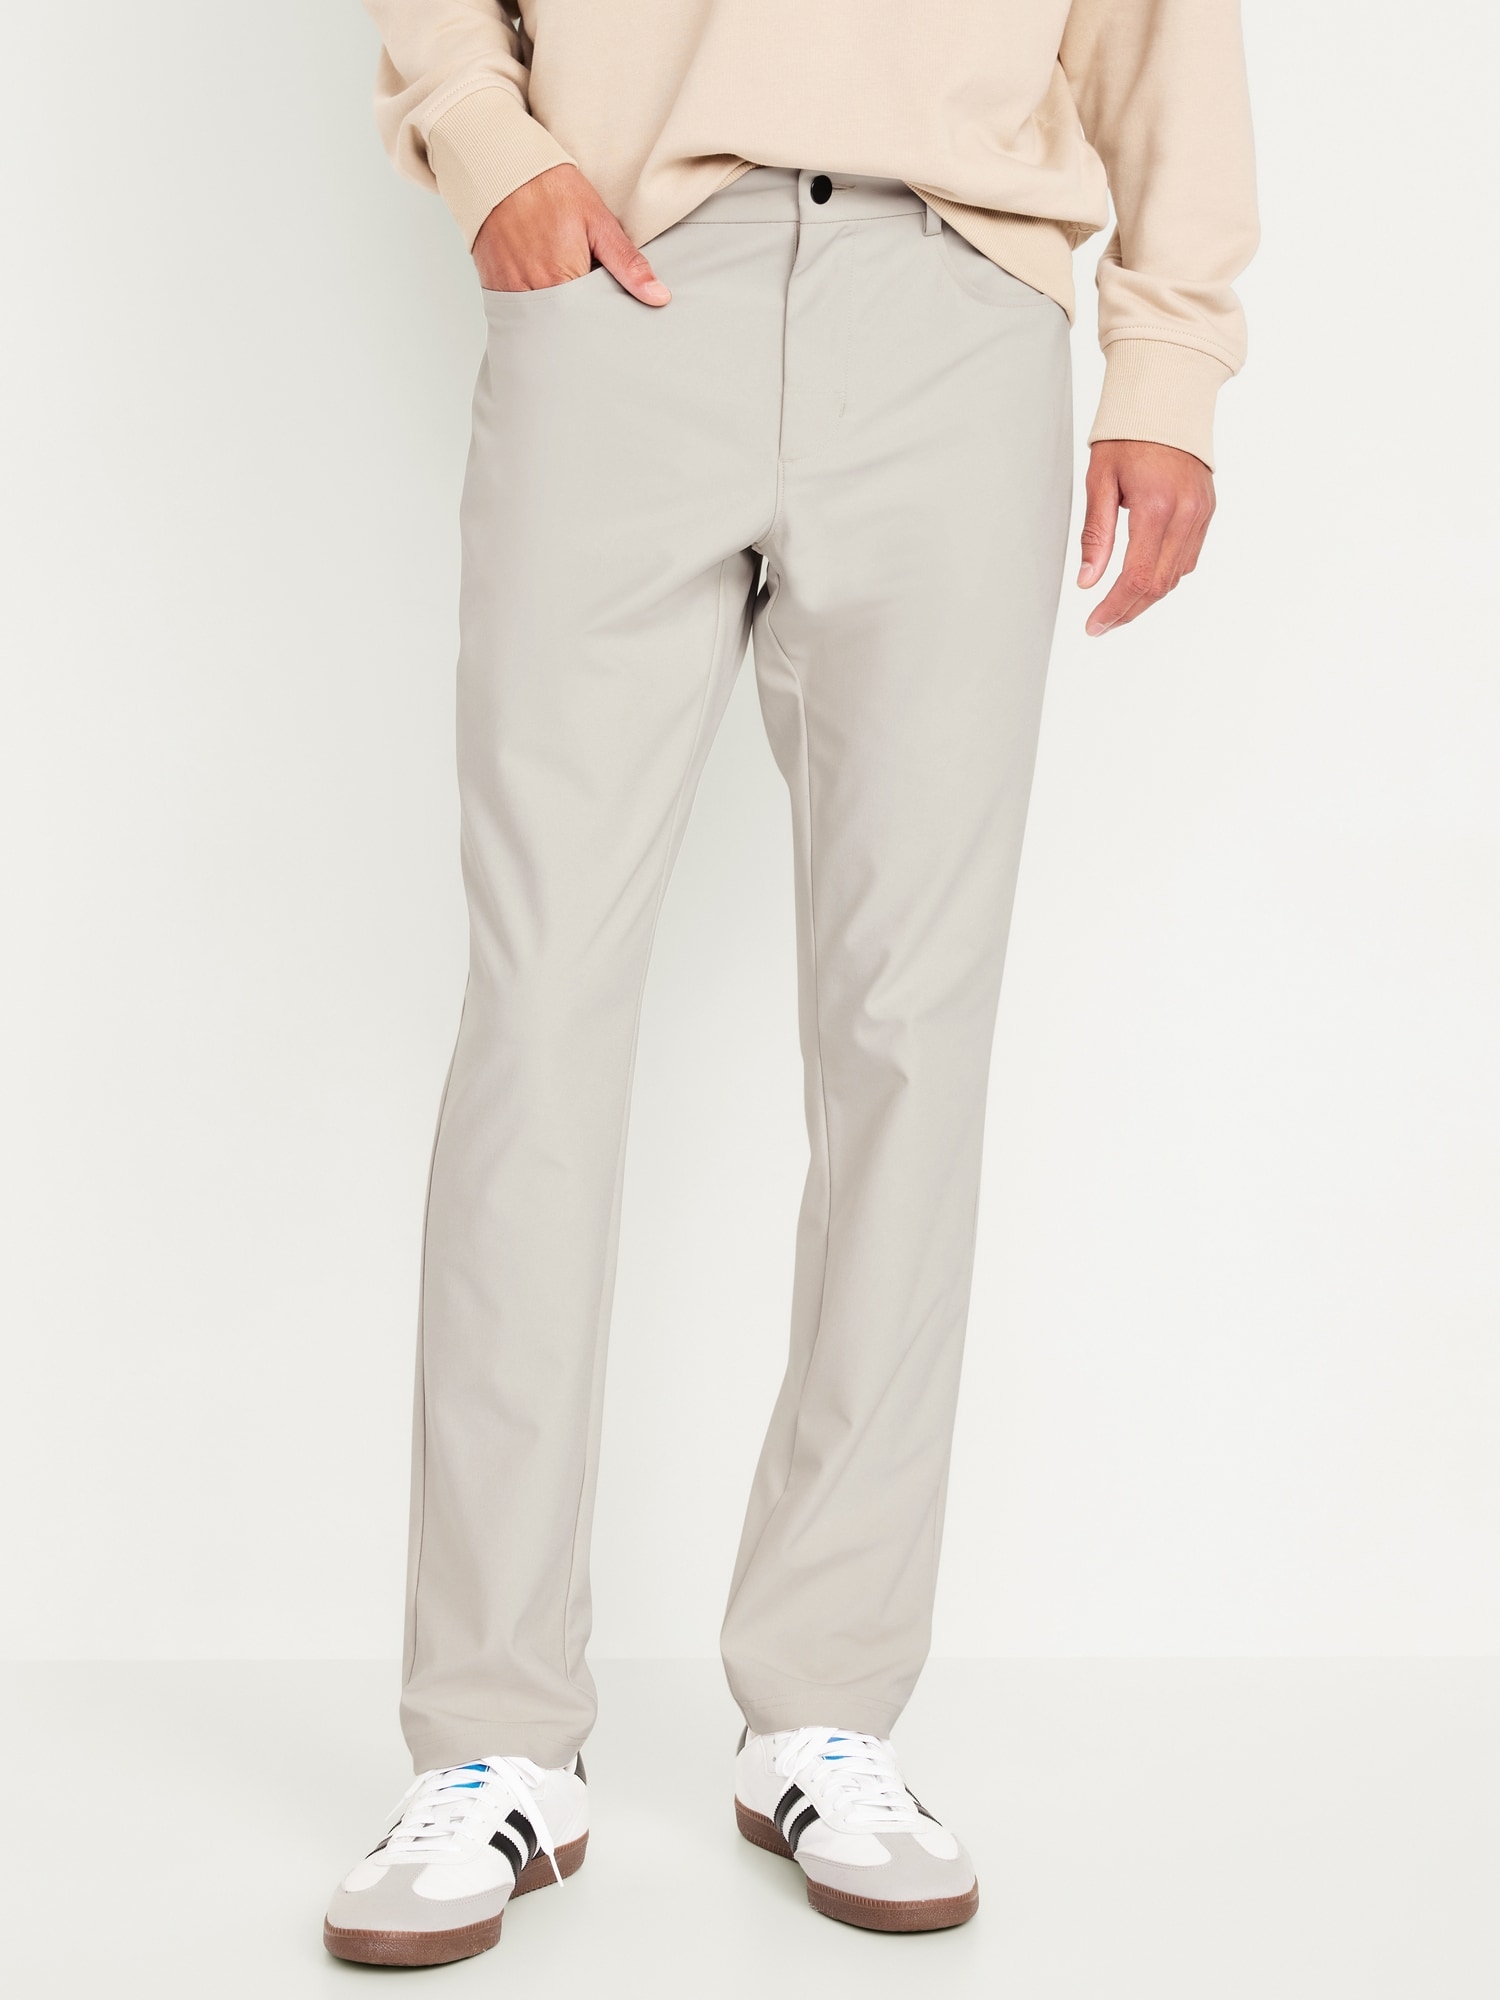 Men's Stretch Golf Pants Slim Fit Quick Dry Pants - Light Khaki / S